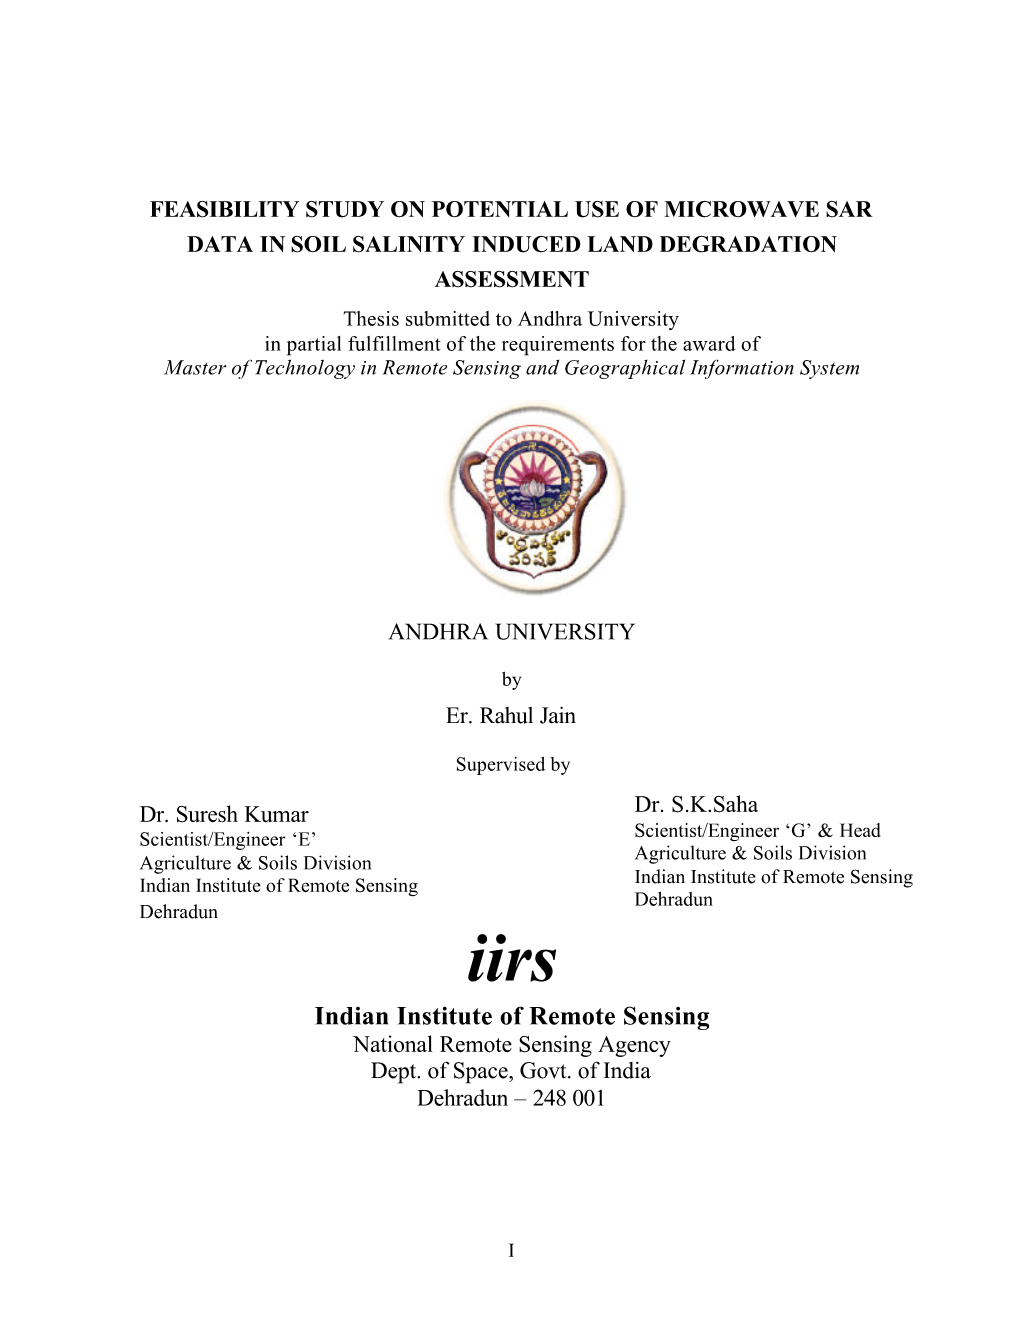 Iirs Indian Institute of Remote Sensing National Remote Sensing Agency Dept